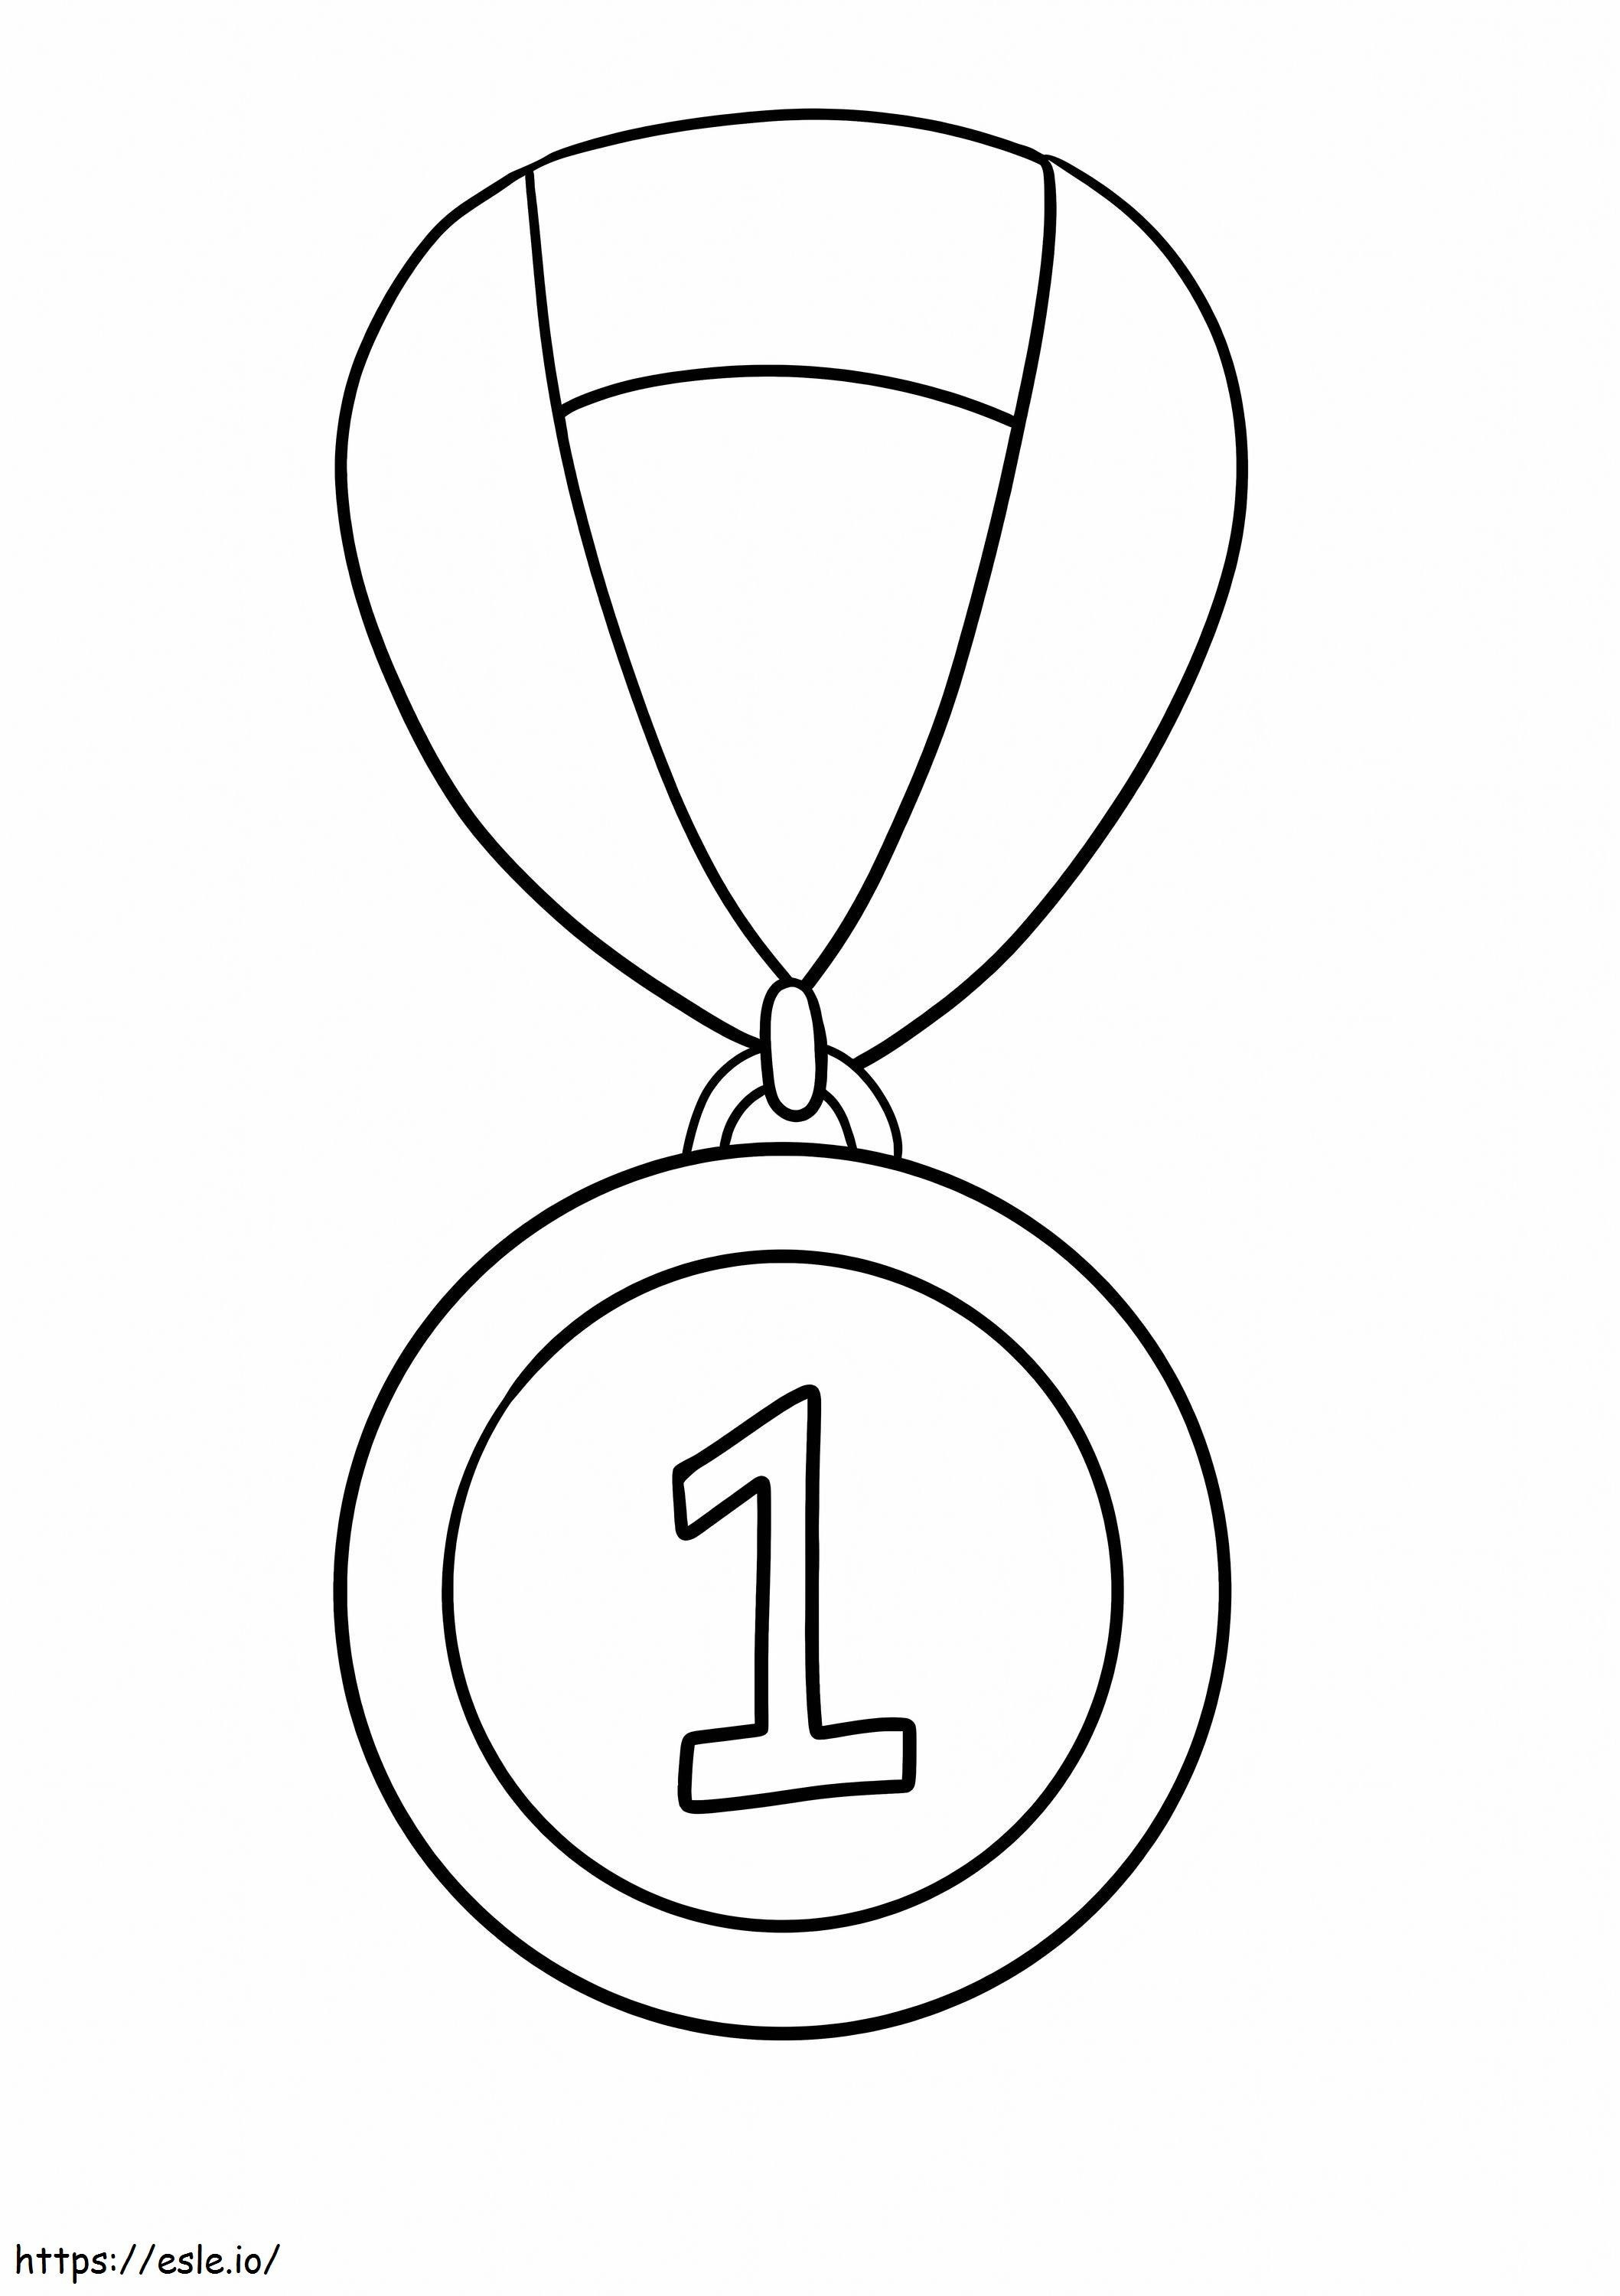 Medaille nummer 1 kleurplaat kleurplaat